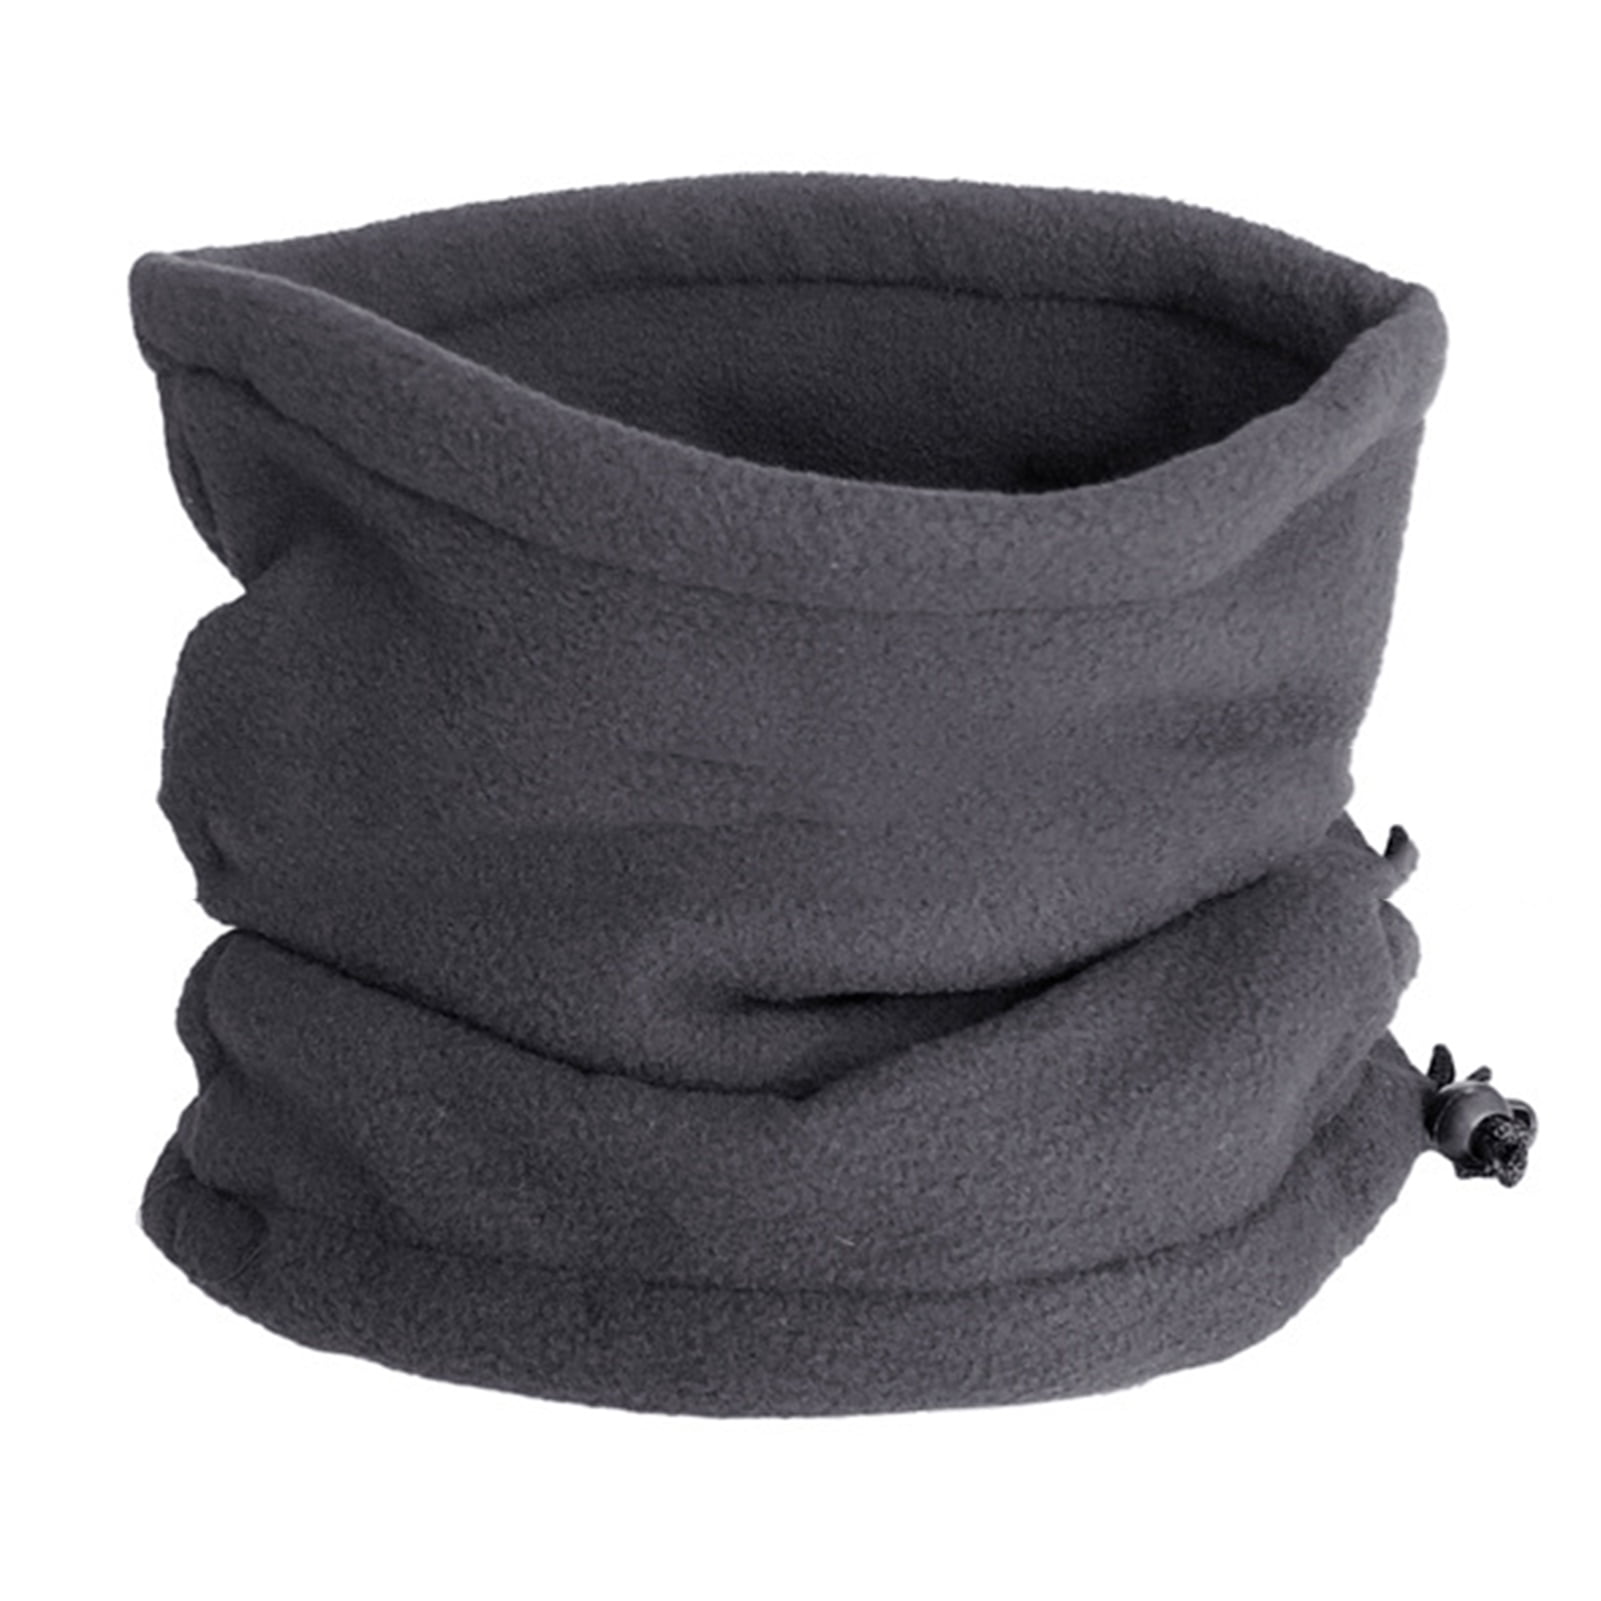 Details about   Gaiter 4 In 1 Knit Fleece Neck Warmer Headgear Unisex One Size Reversible New 